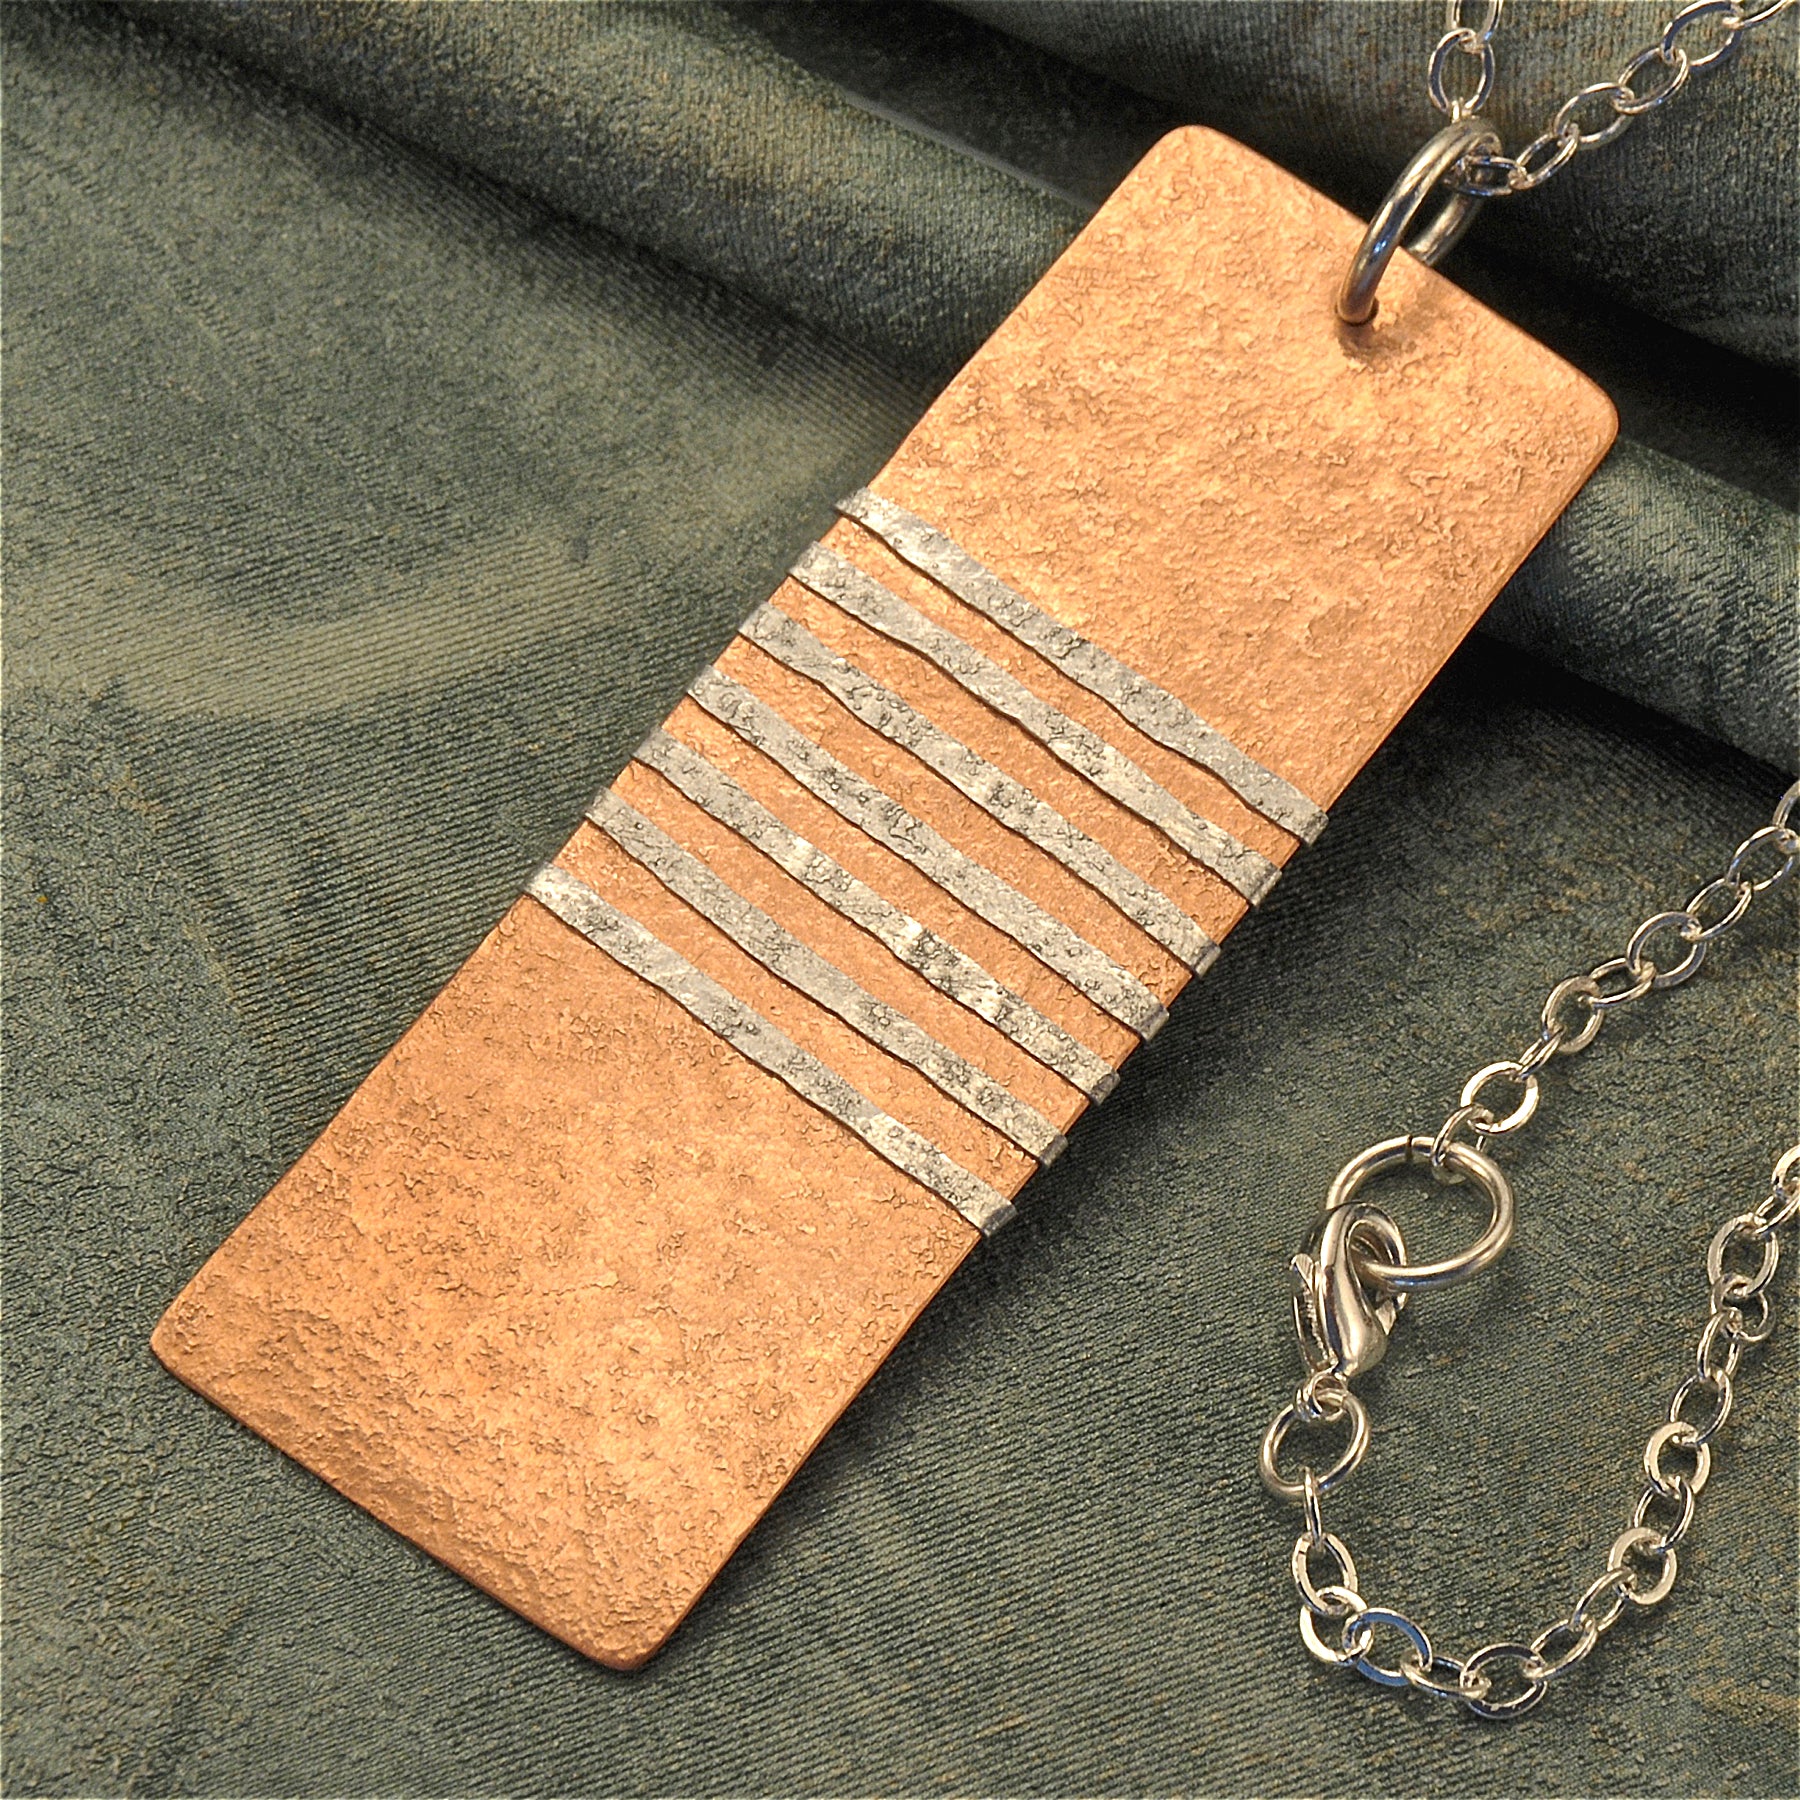 Rectangular copper necklace